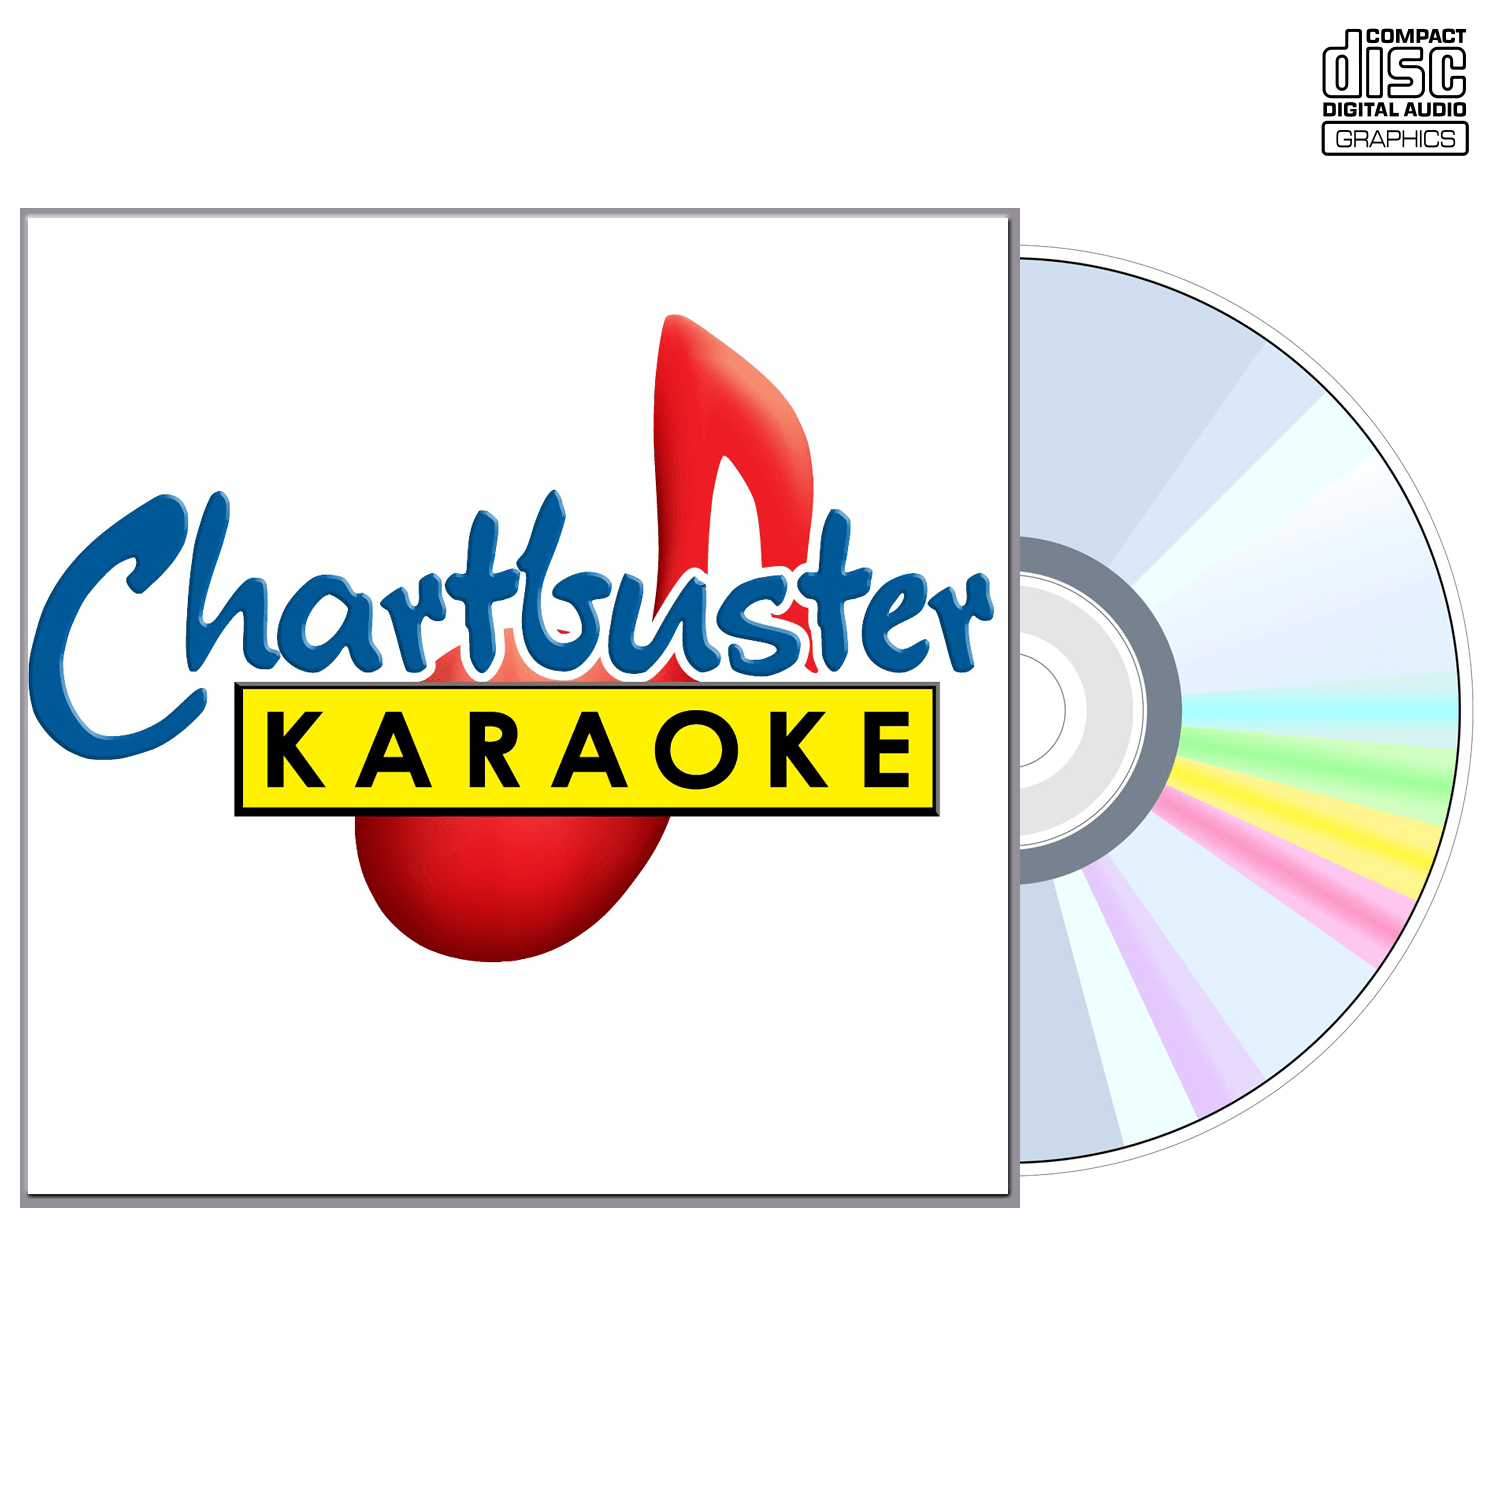 Jessica Andrews - CD+G - Chartbuster Karaoke - Karaoke Home Entertainment